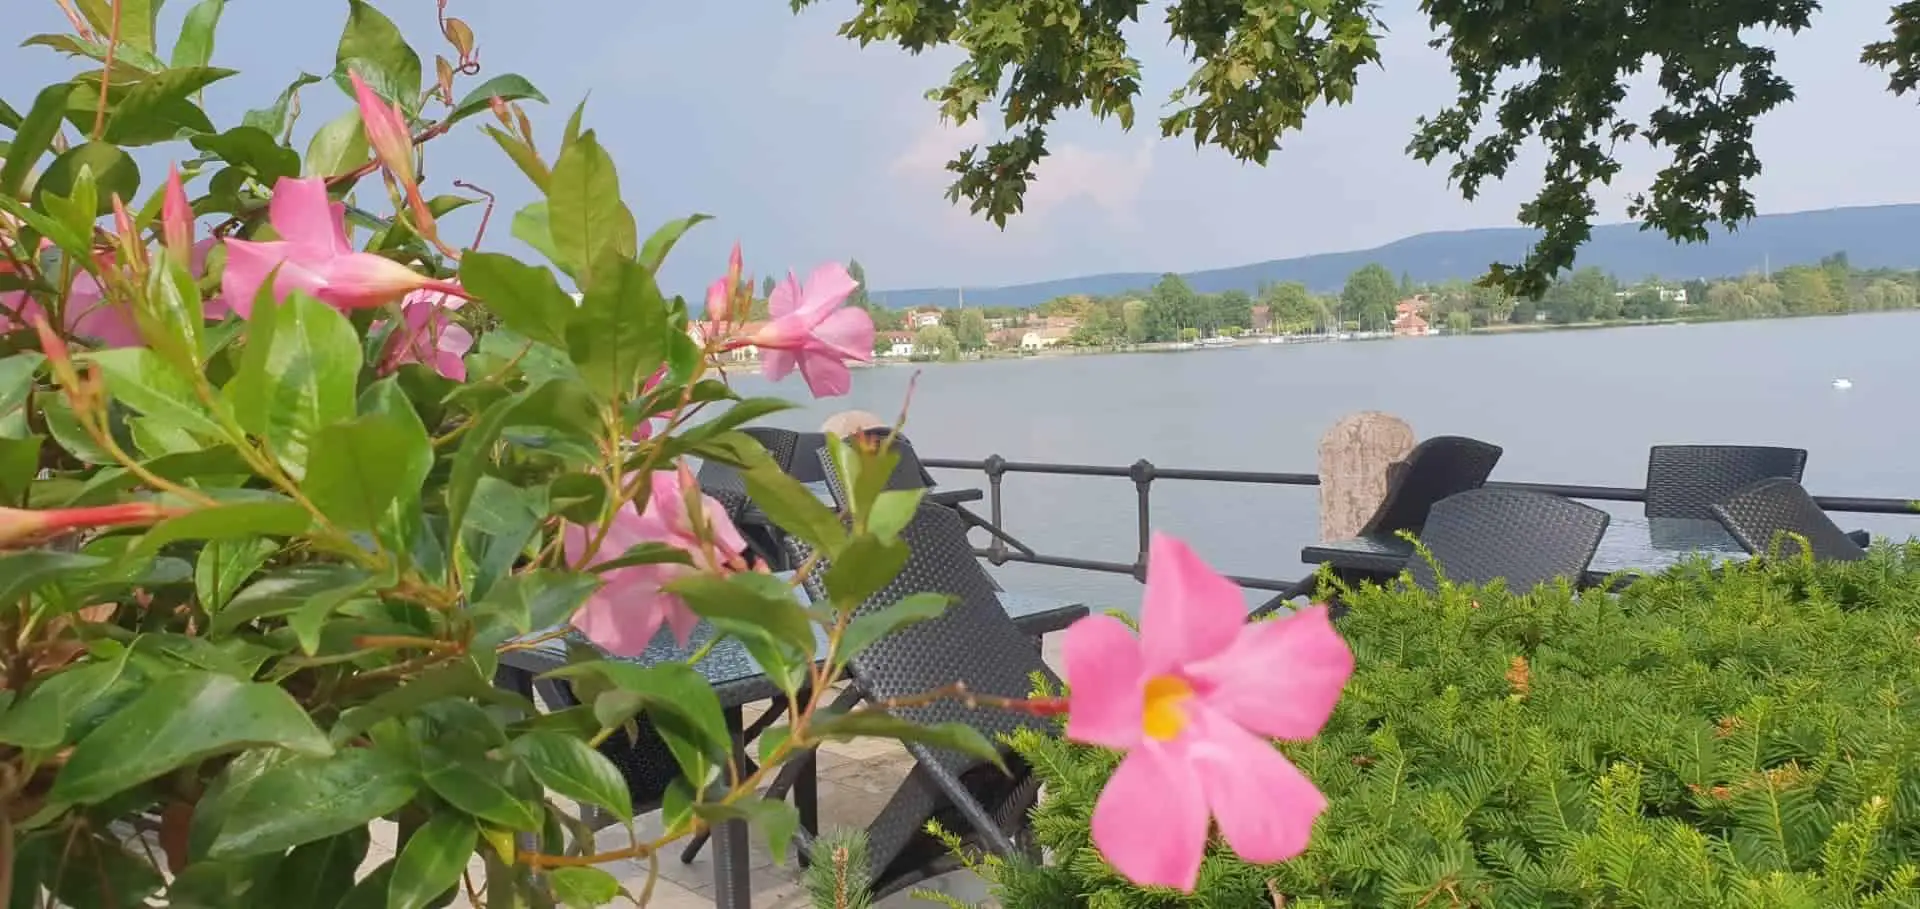 Tata old lake, flowers